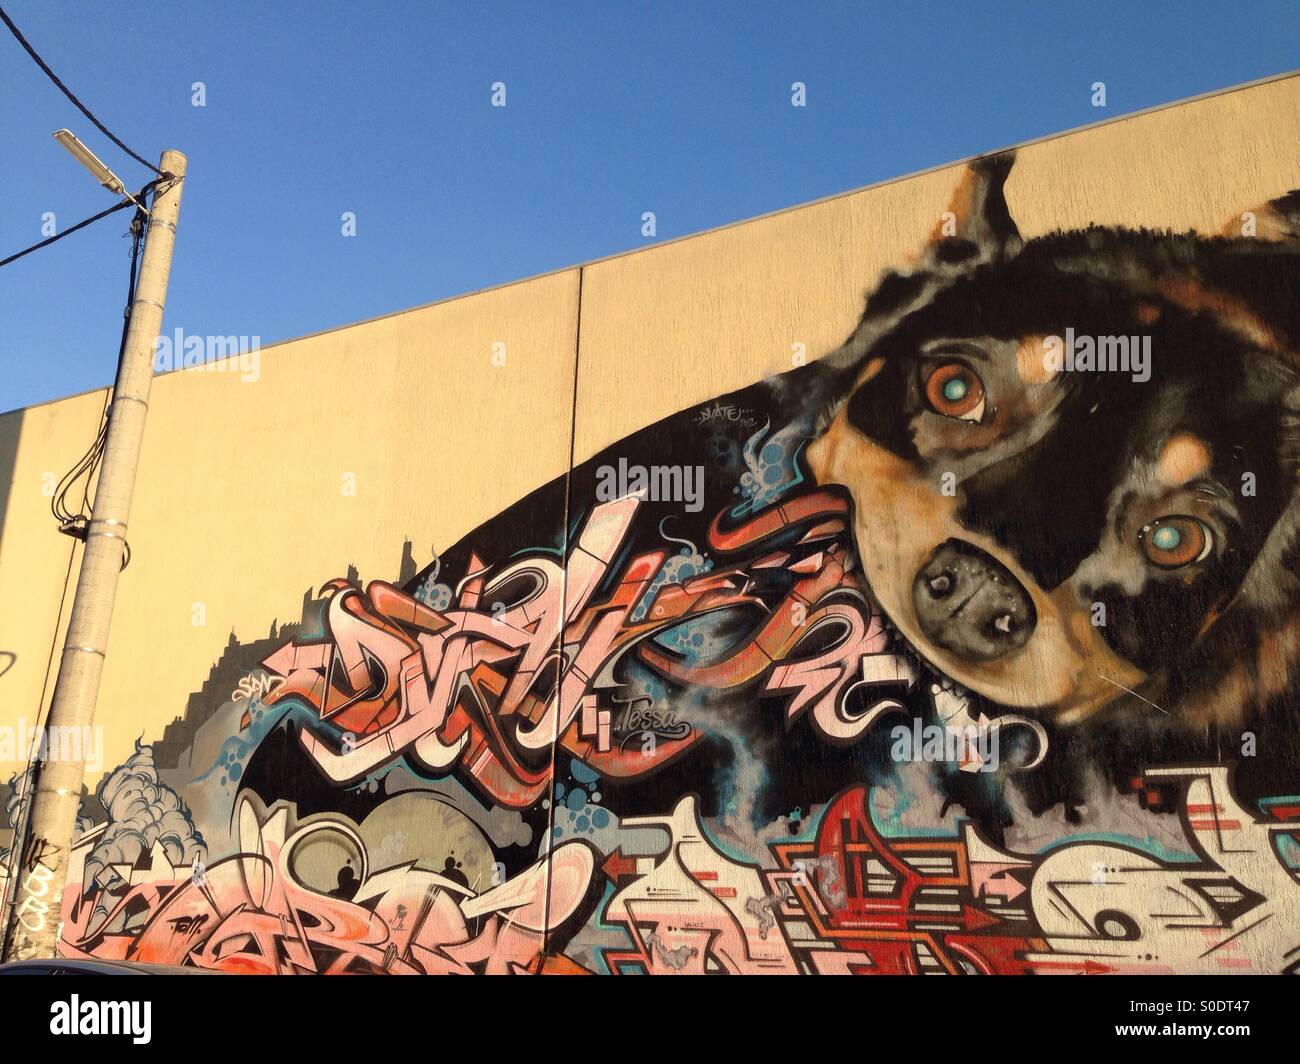 Street art graffiti of dog eating graffiti words on wall in Melbourne Stock Photo